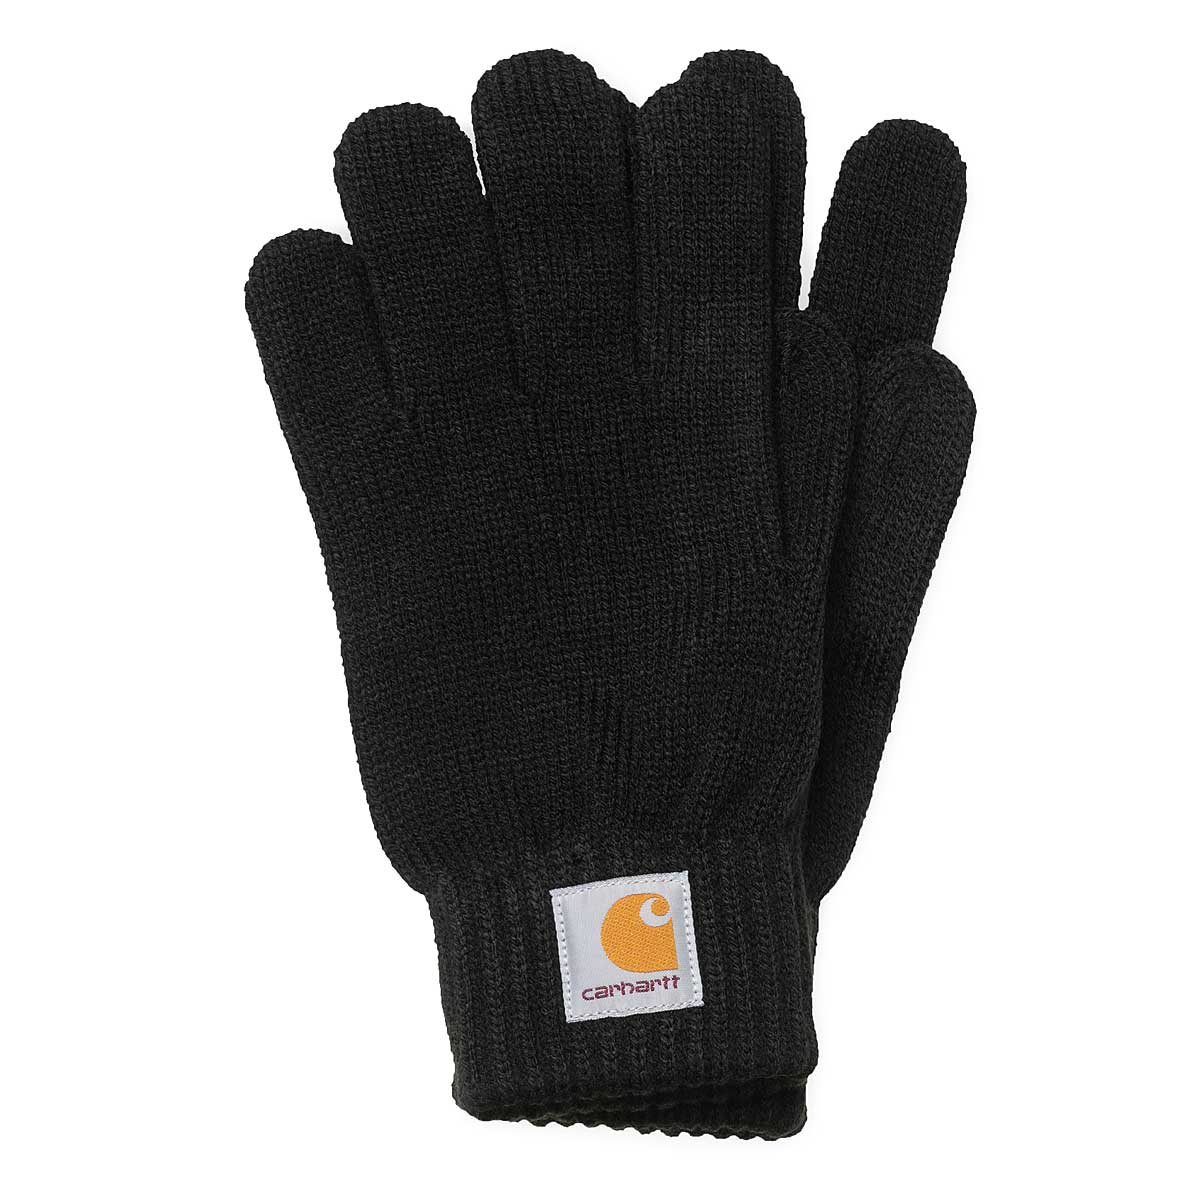 Carhartt Wip Watch Gloves, Black